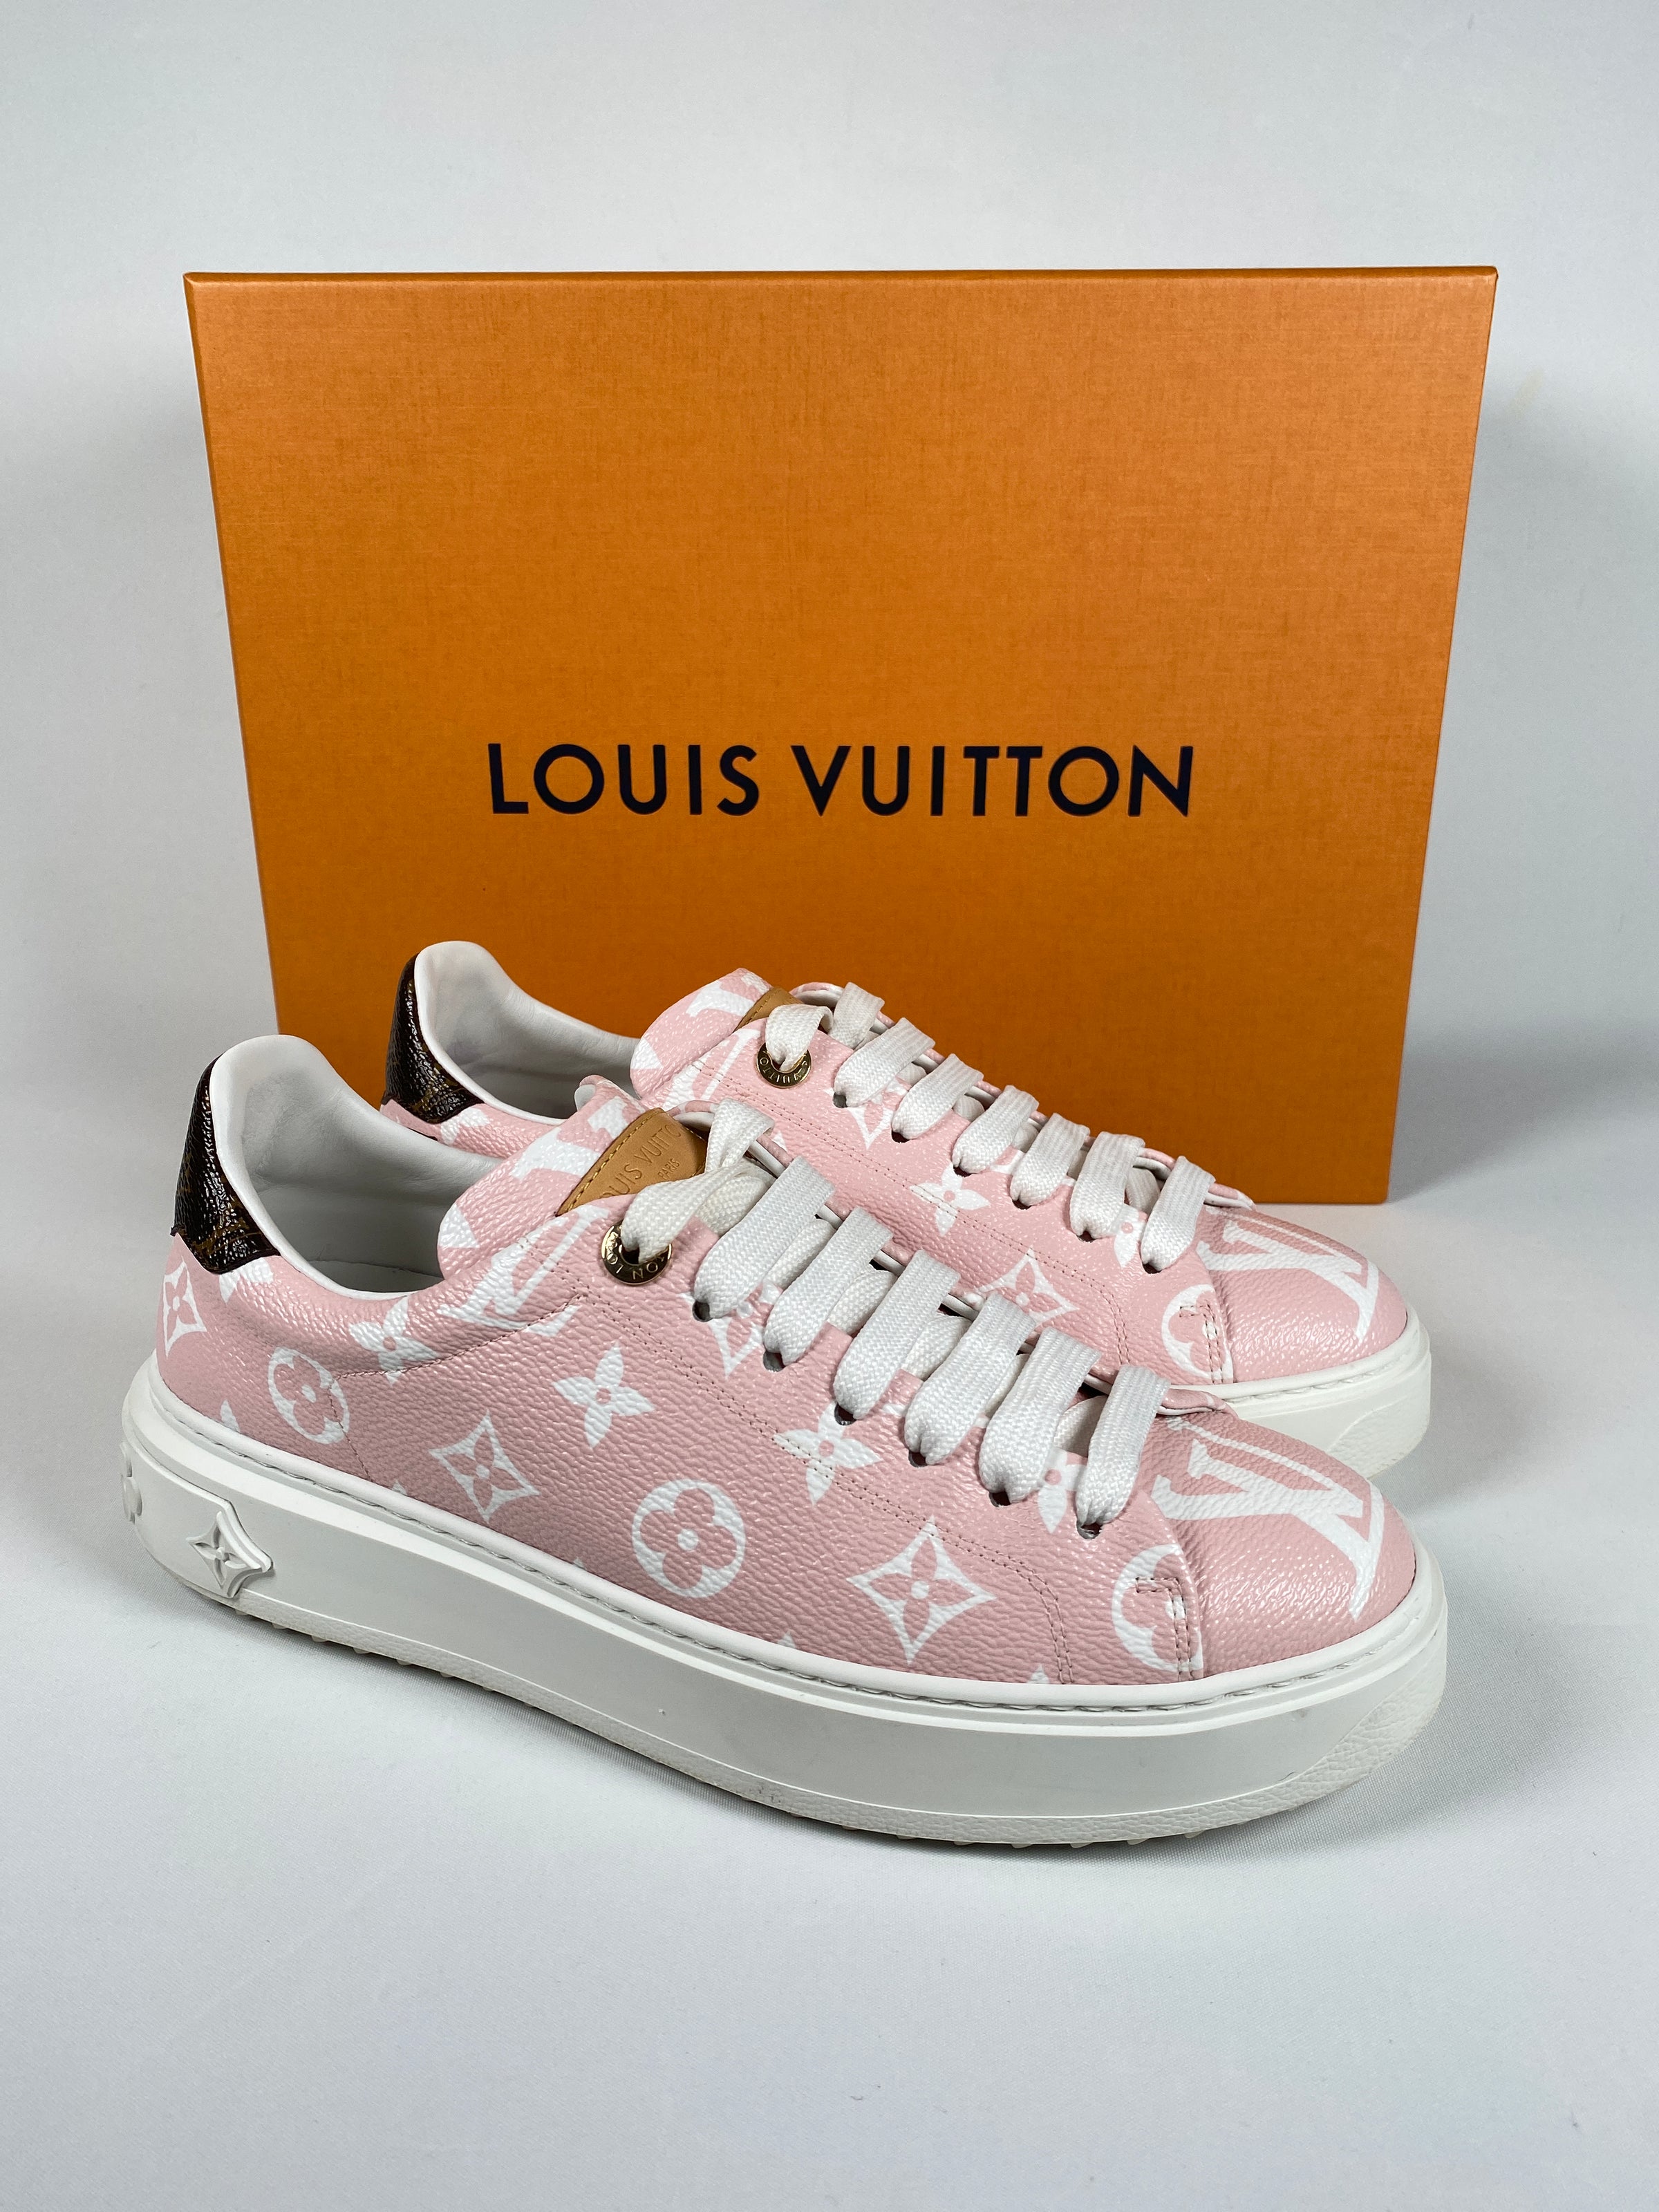 Louis Vuitton Wmns Time Out Sneaker Pink Monogram  GOAT